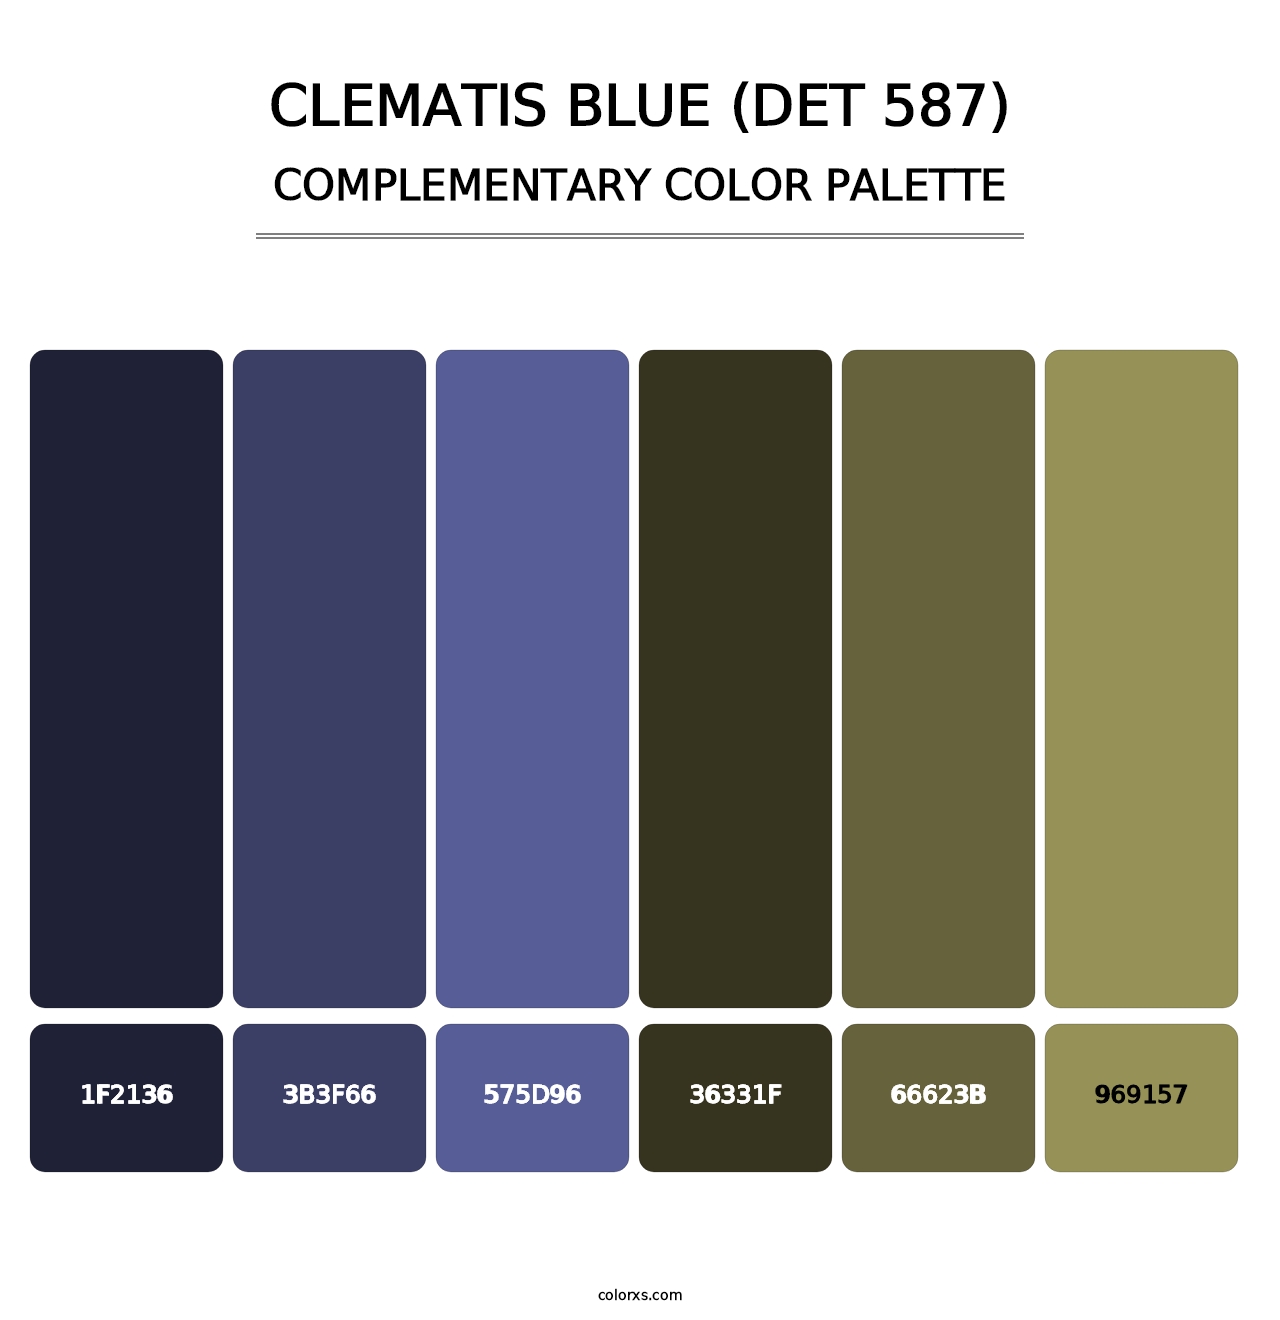 Clematis Blue (DET 587) - Complementary Color Palette